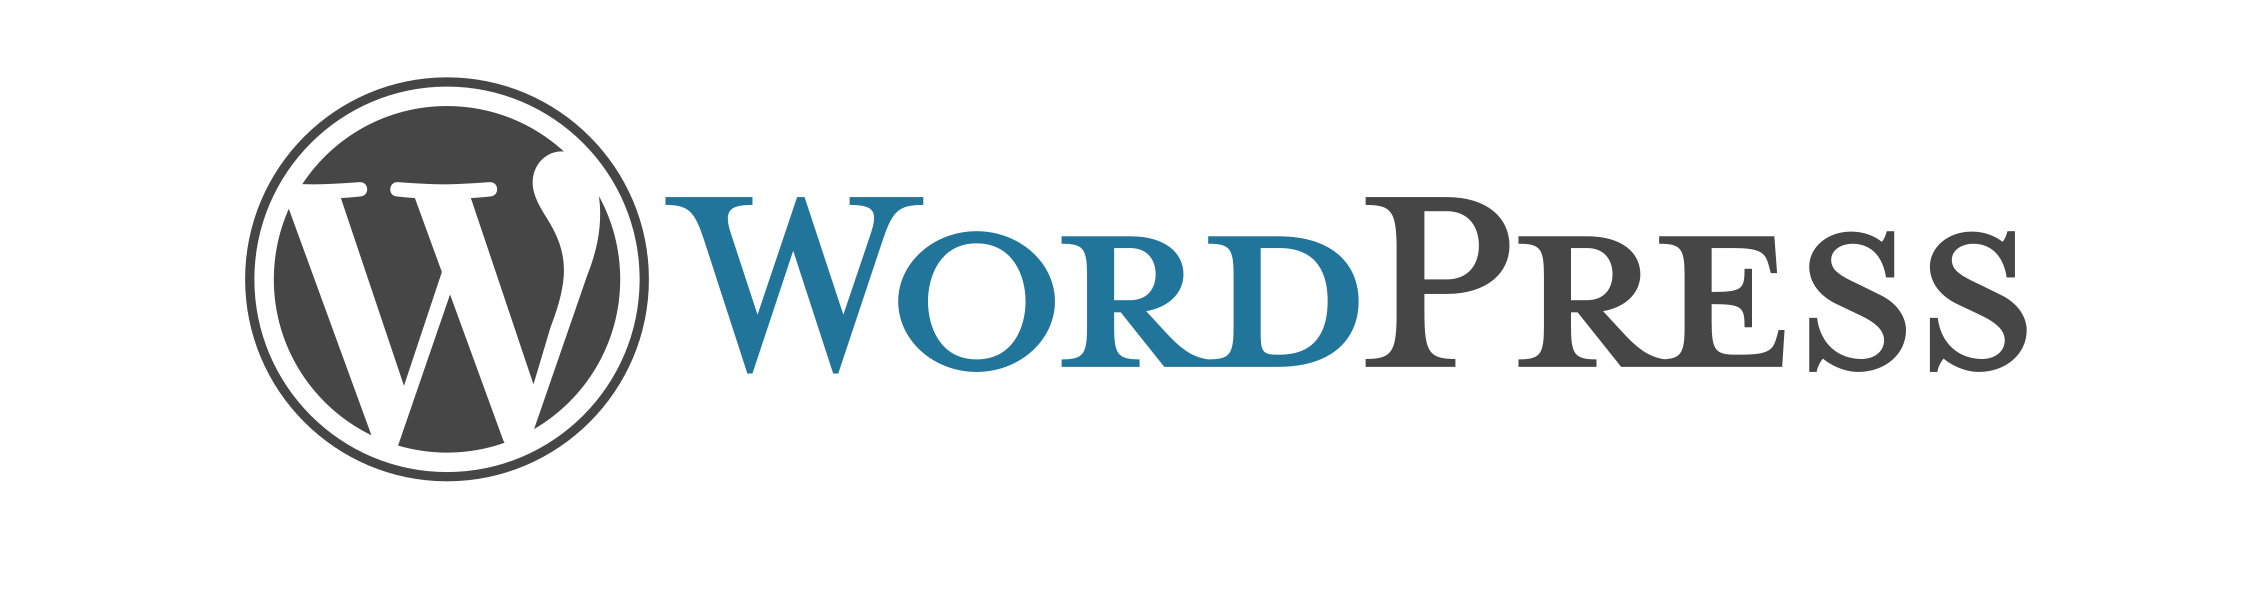 wordpress logo 29015 e1670679346147